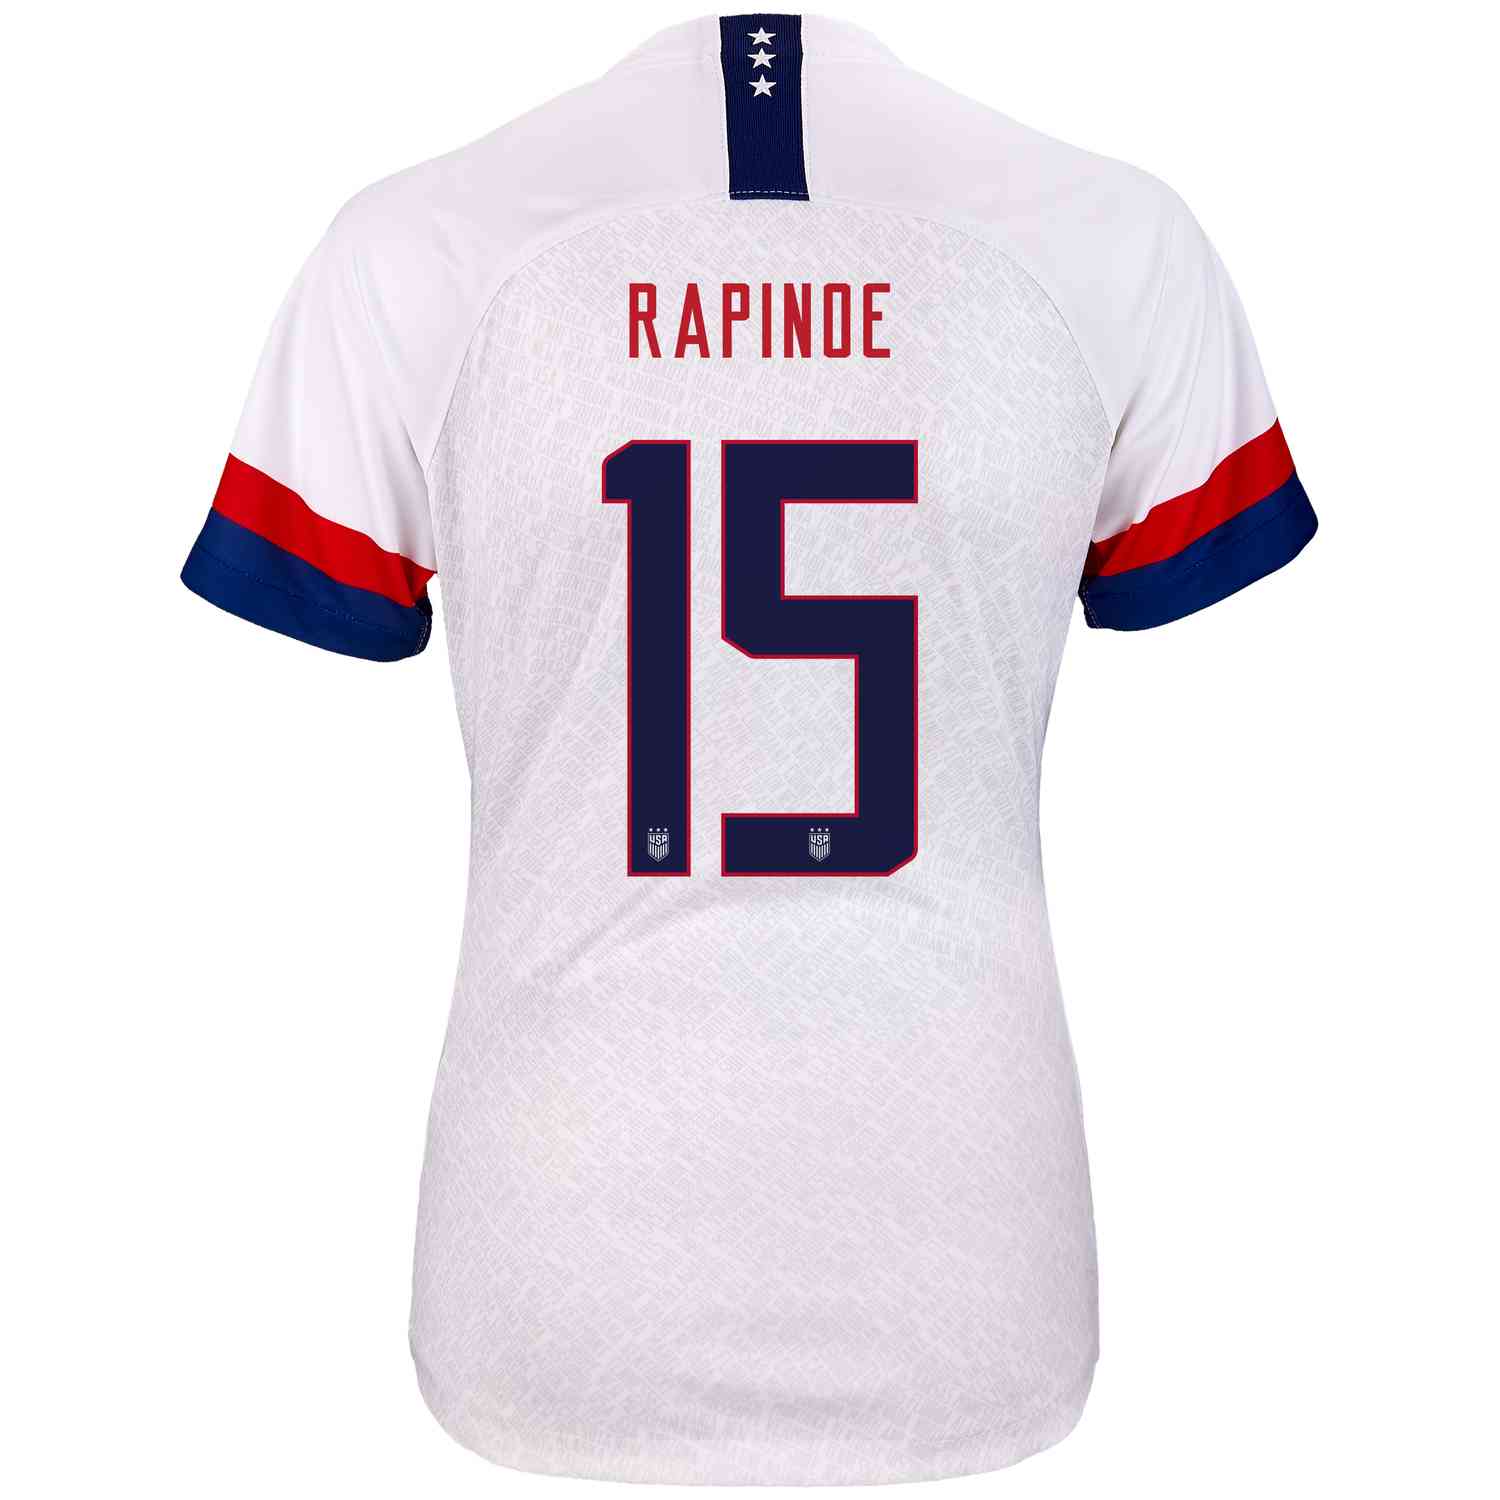 rapinoe jersey 2019